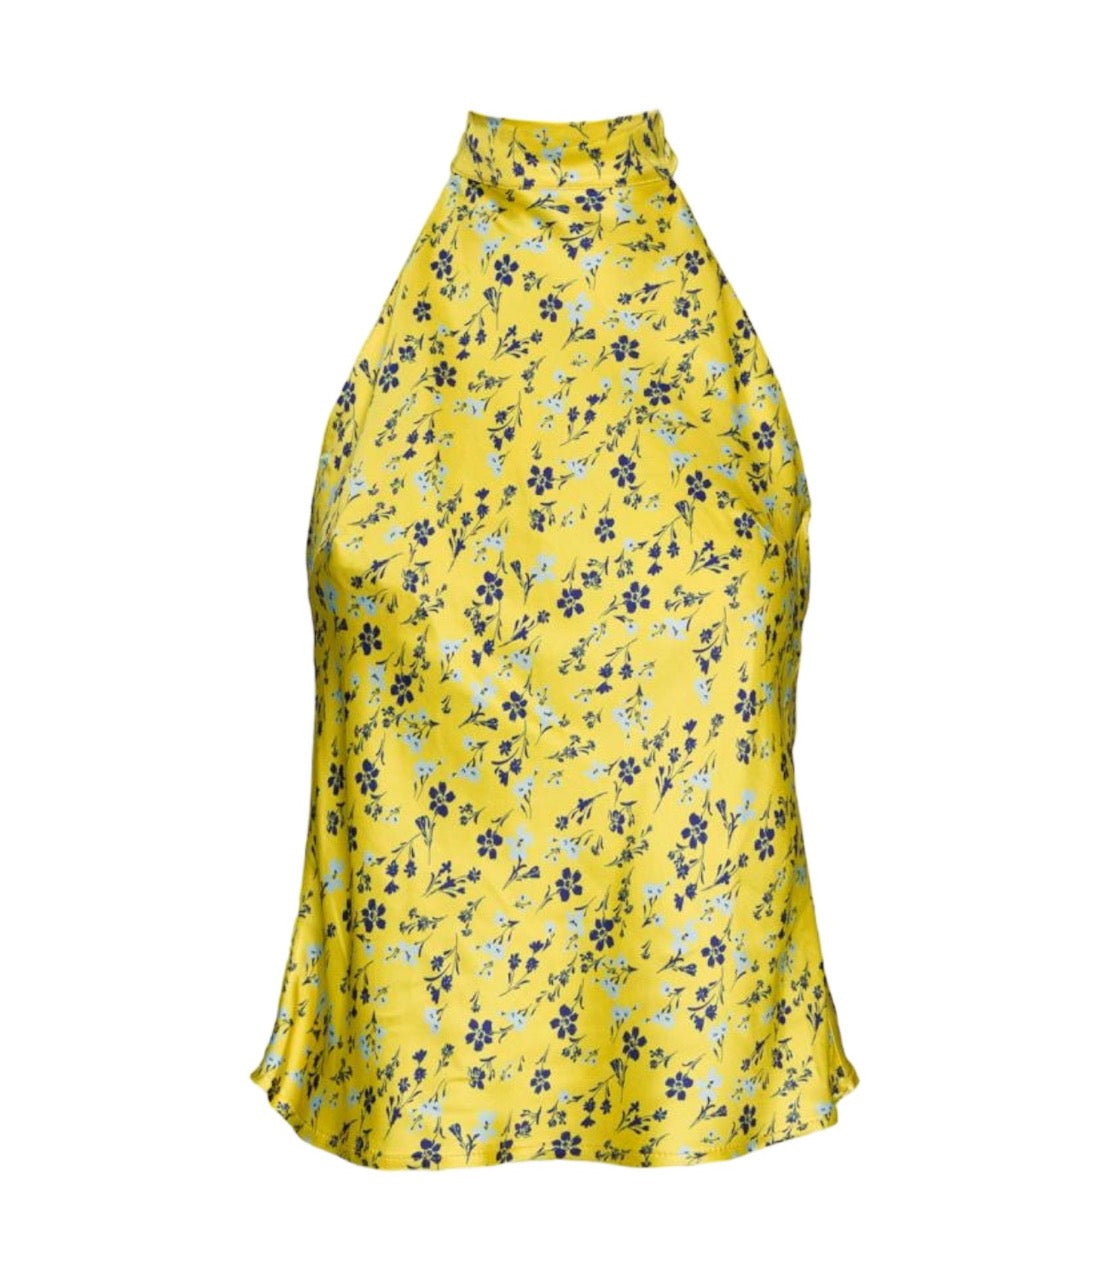 Saiph floral yellow print top